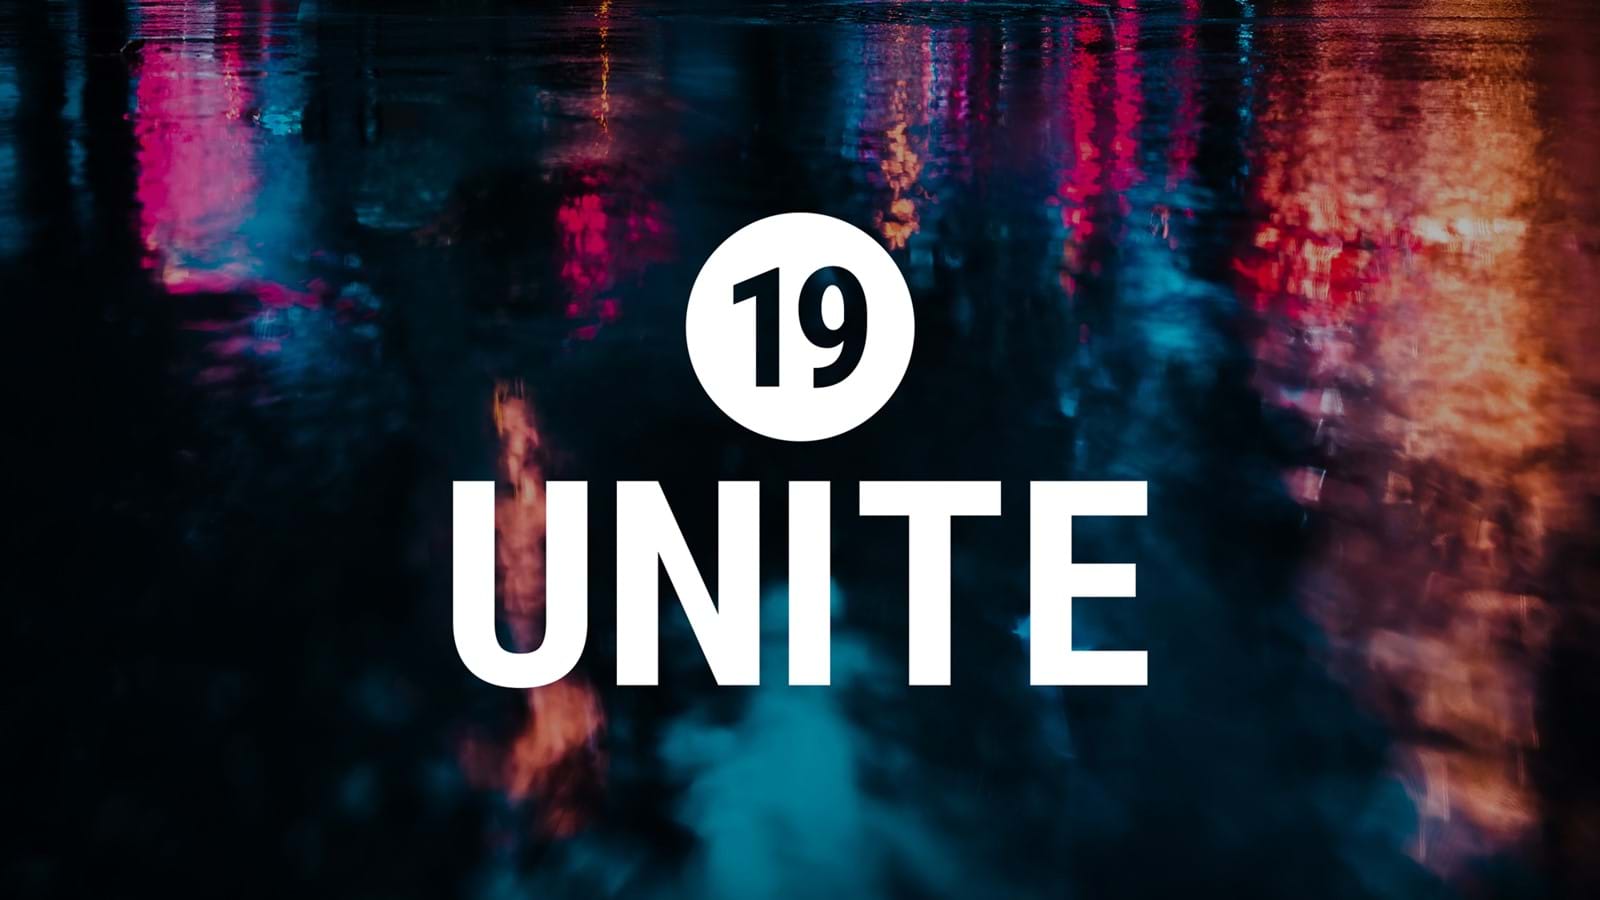 Unite 19 digital workplace conference